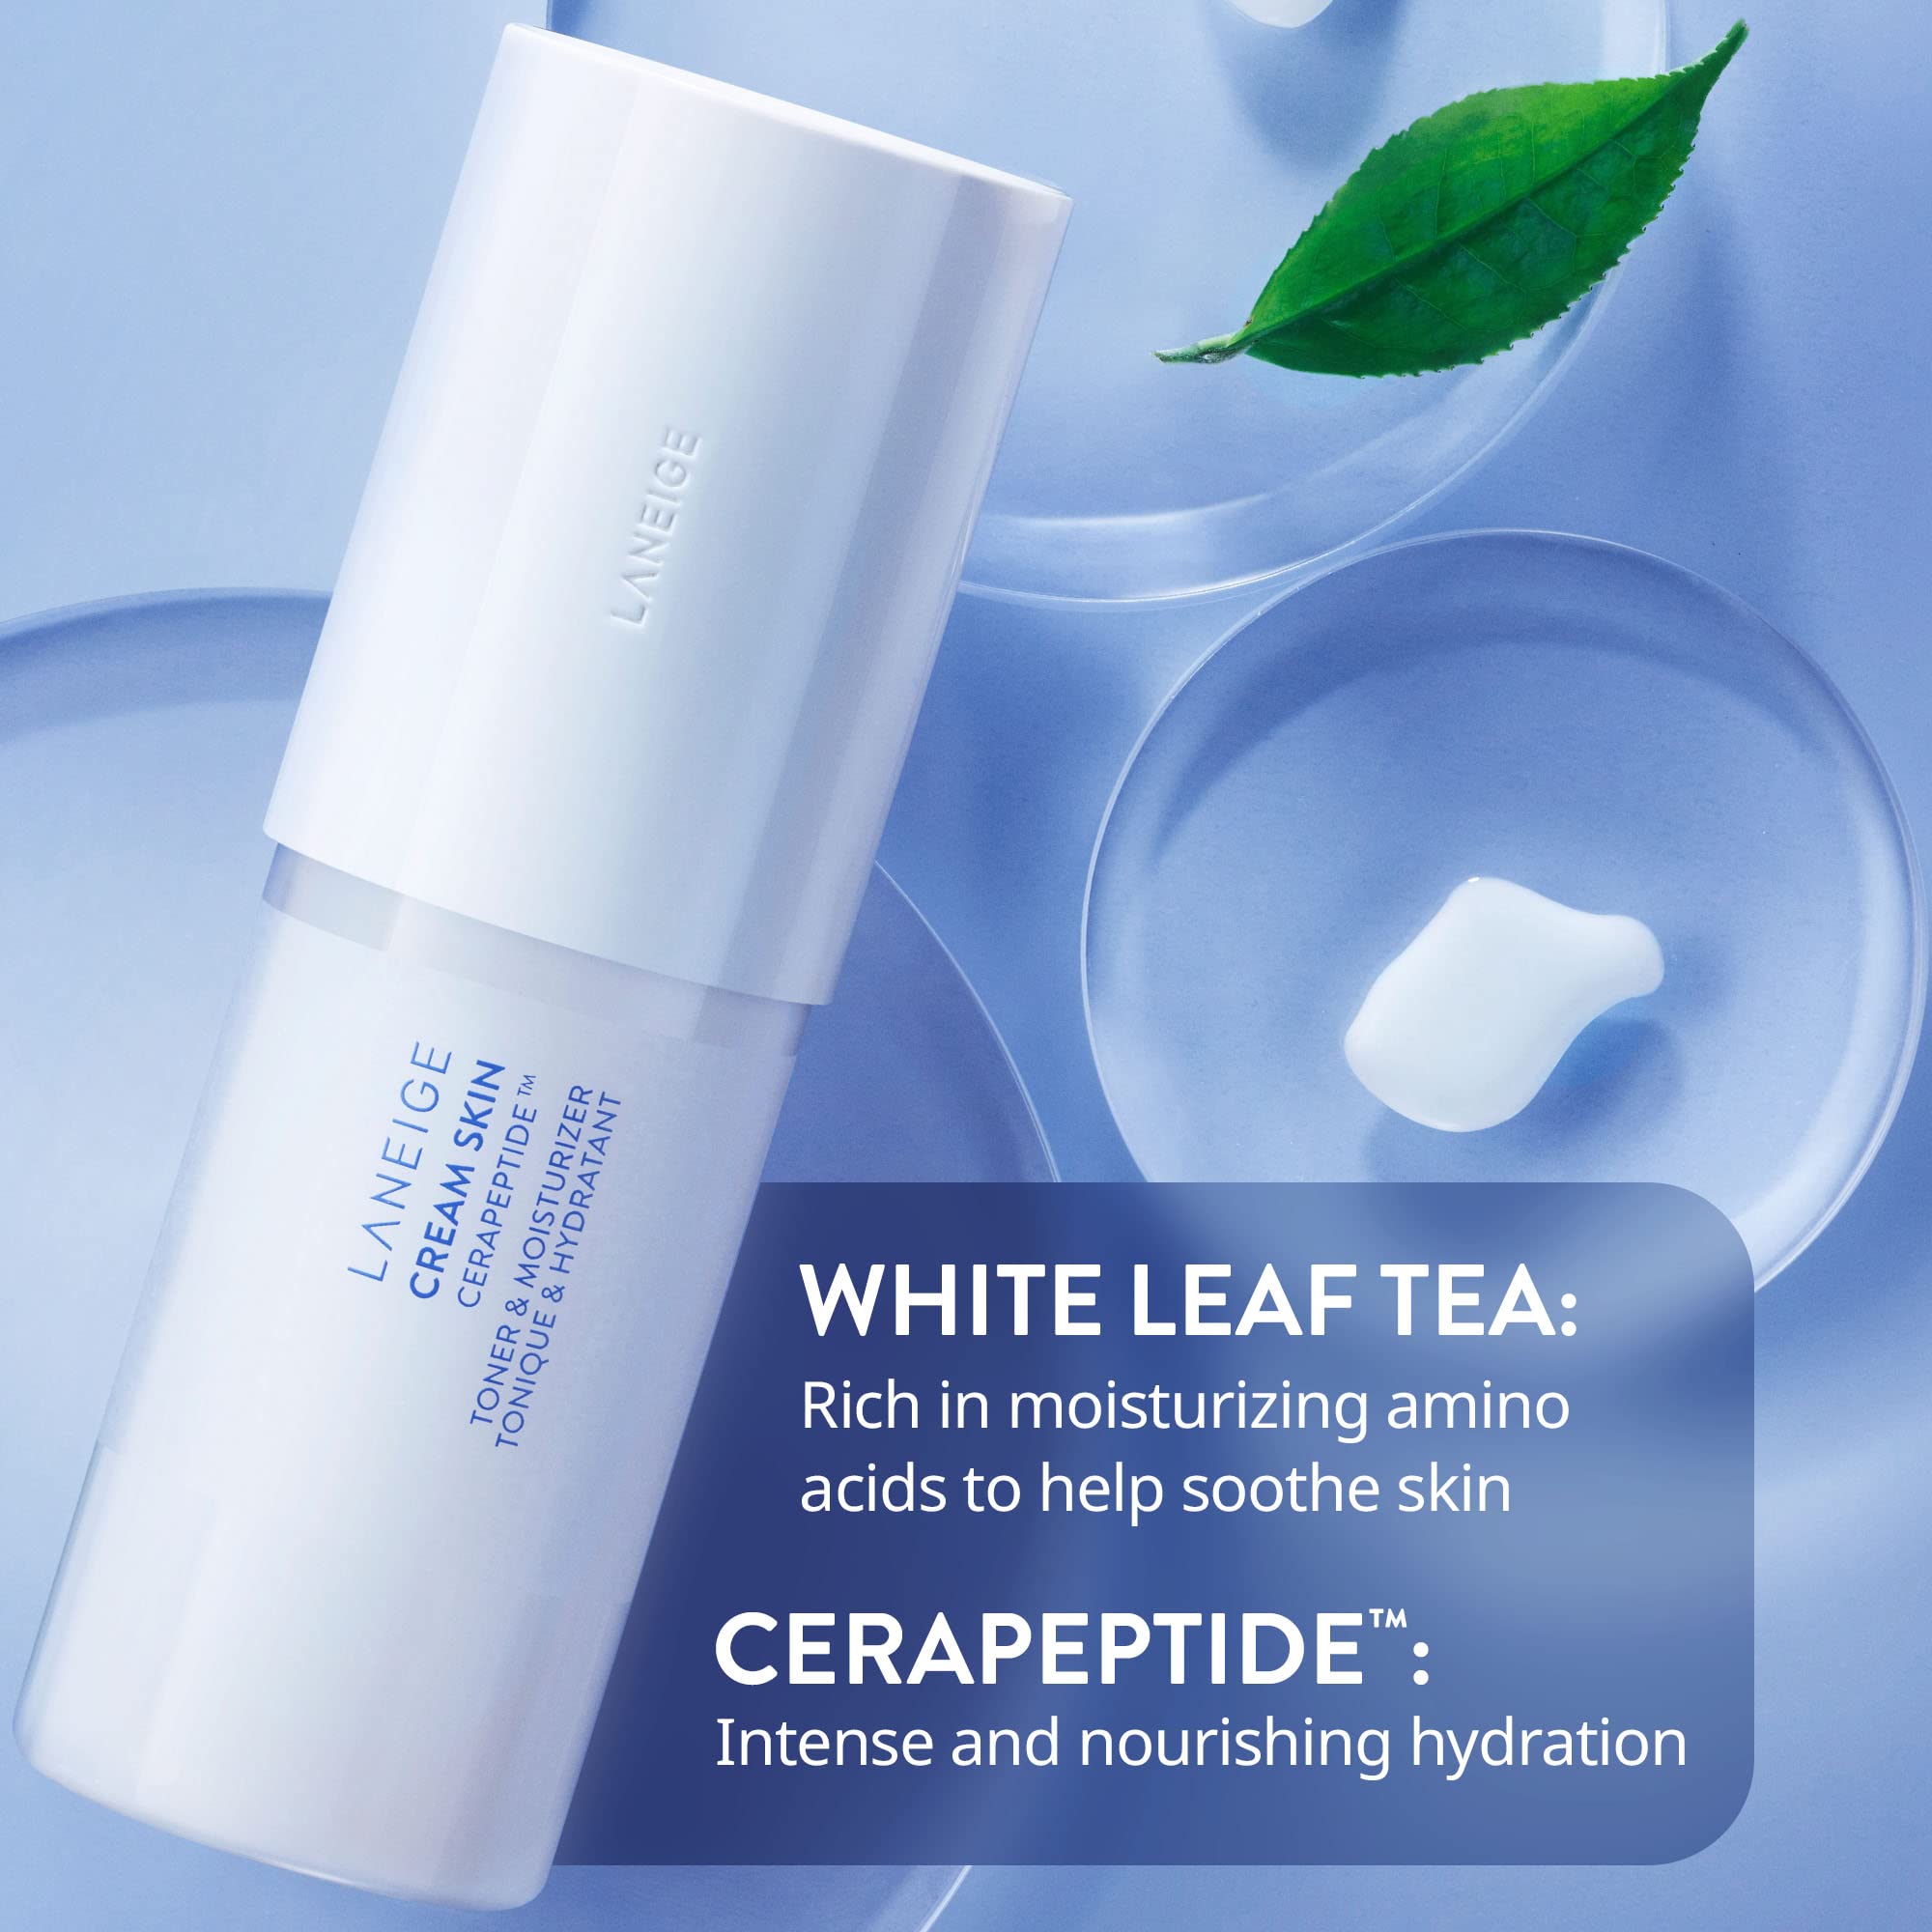 LANEIGE Cream Skin Toner & Moisturizer with Ceramides and Peptides: Soften, Moisturize, and Boosts Skin Barrier